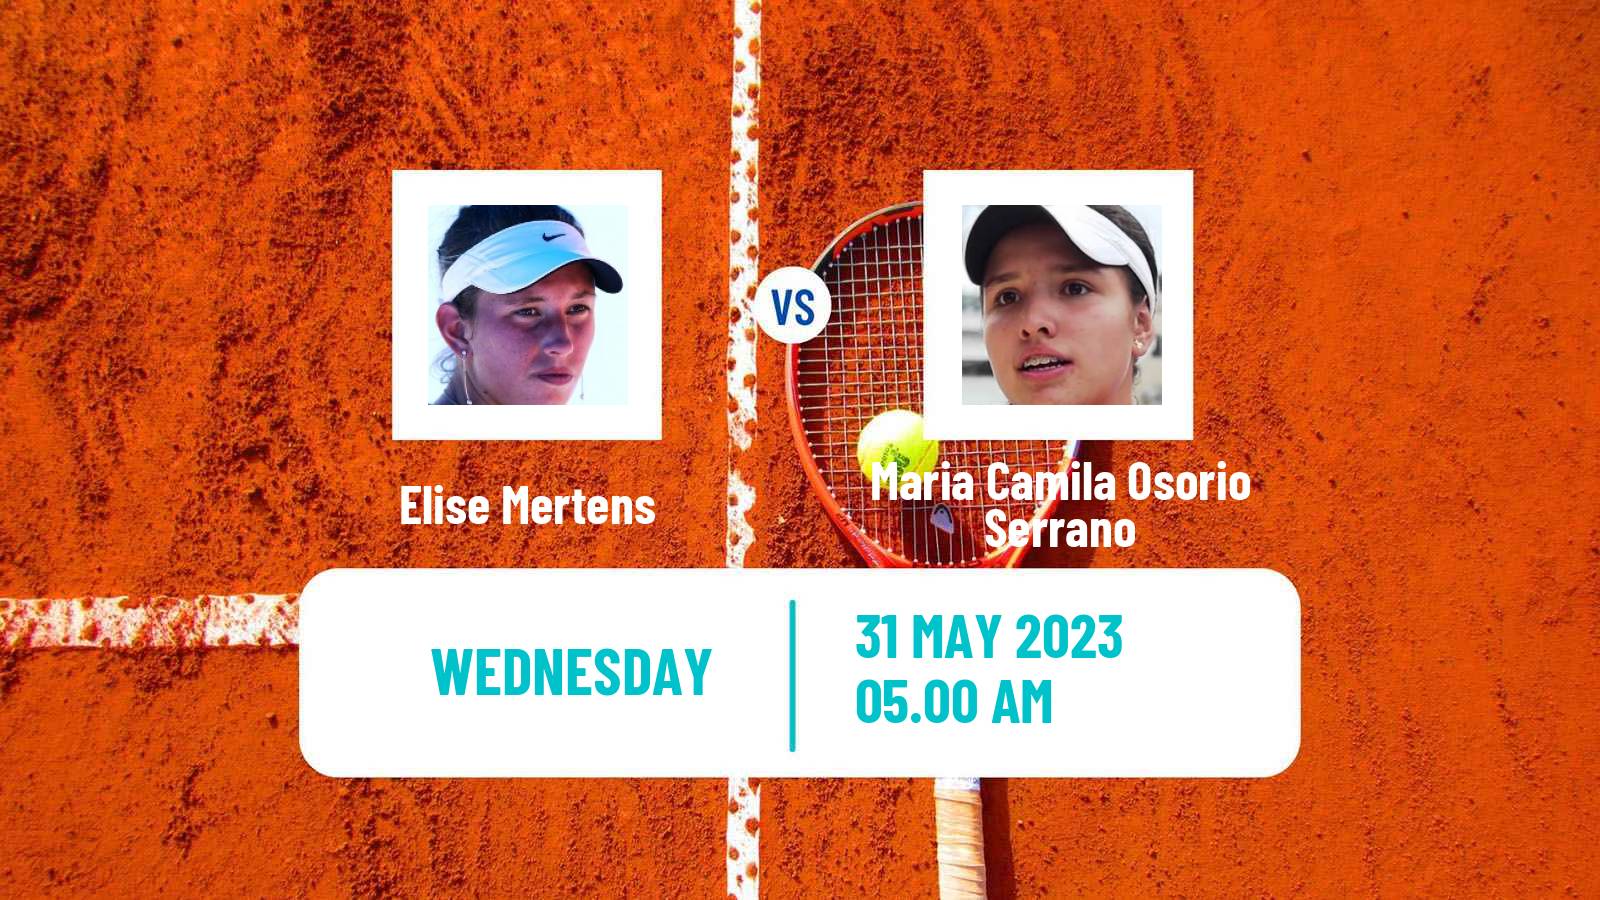 Tennis WTA Roland Garros Elise Mertens - Maria Camila Osorio Serrano